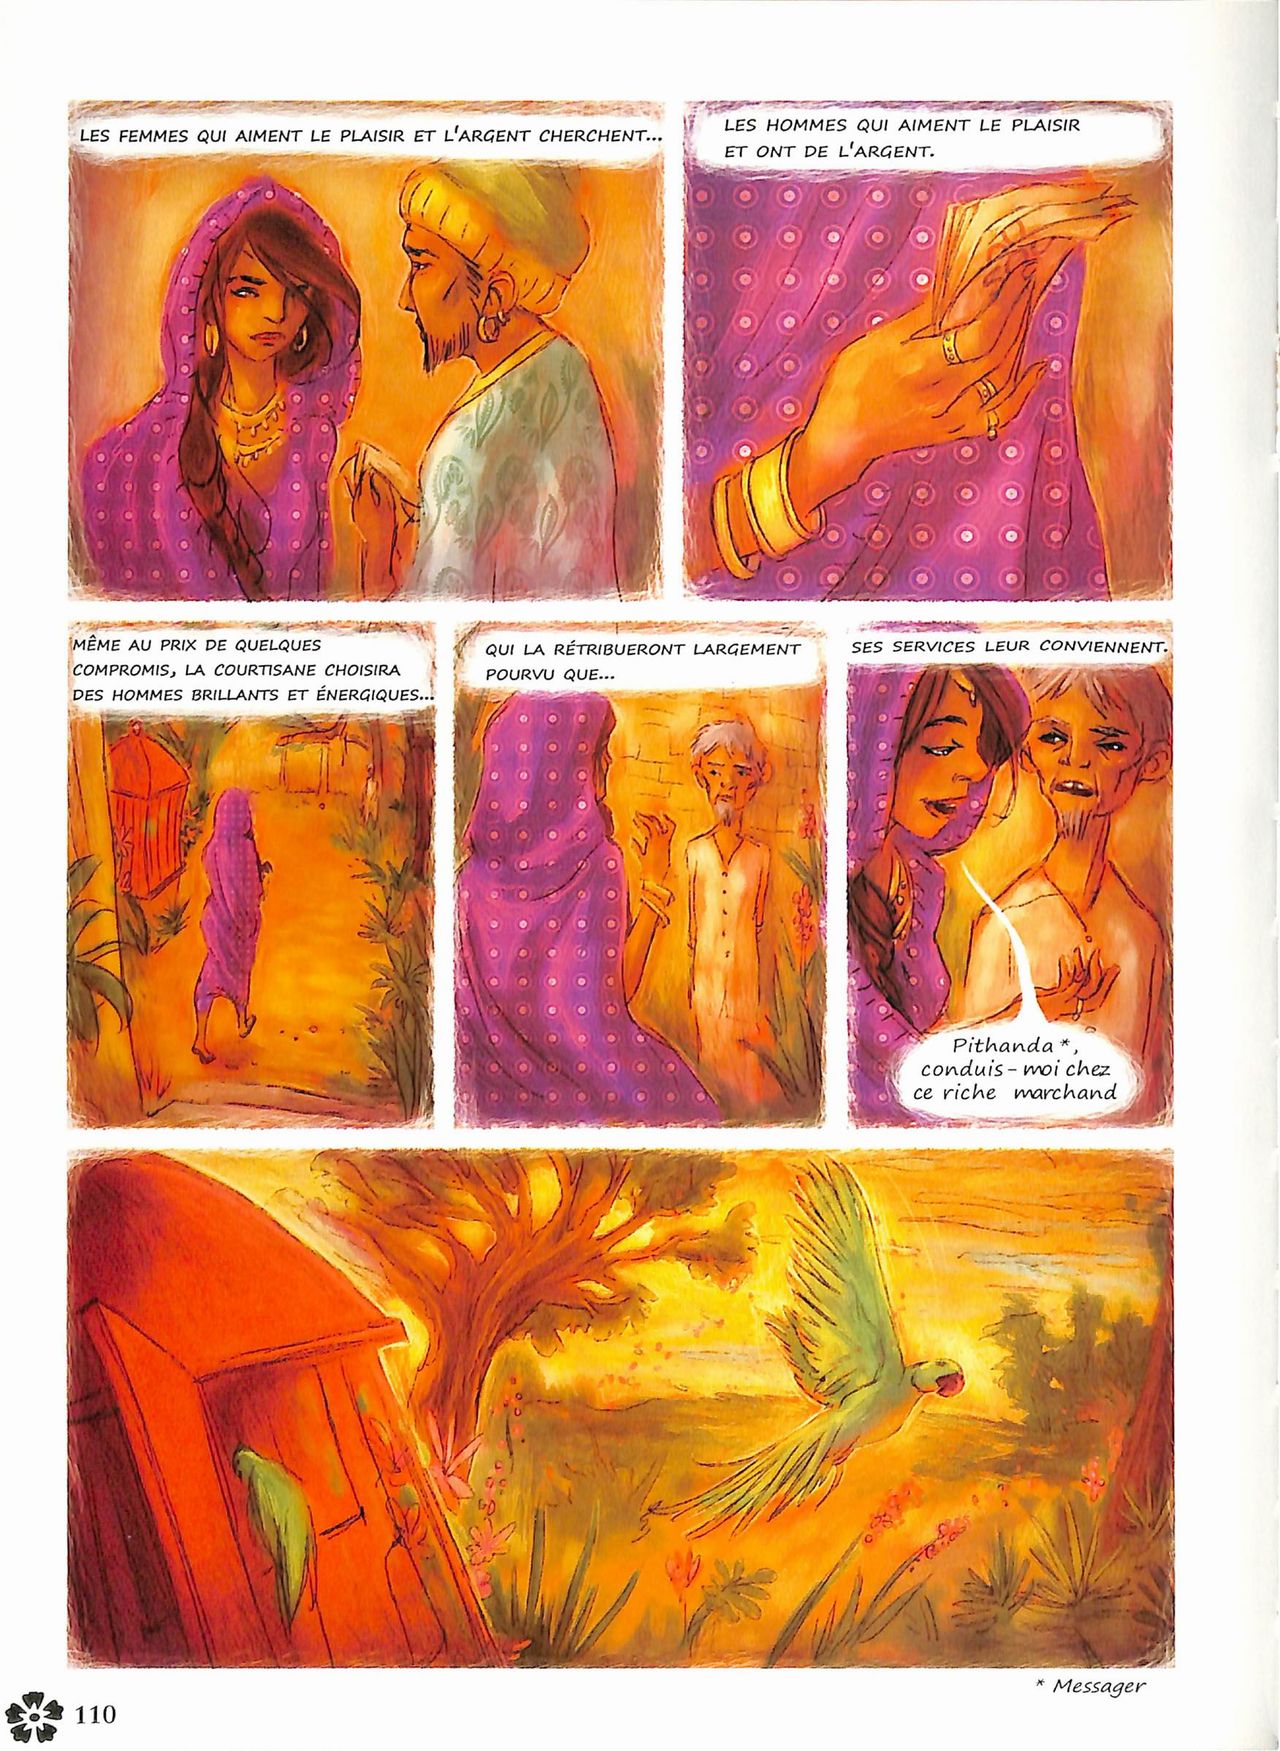 Kama Sutra en bandes dessinées - Kama Sutra with Comics numero d'image 110